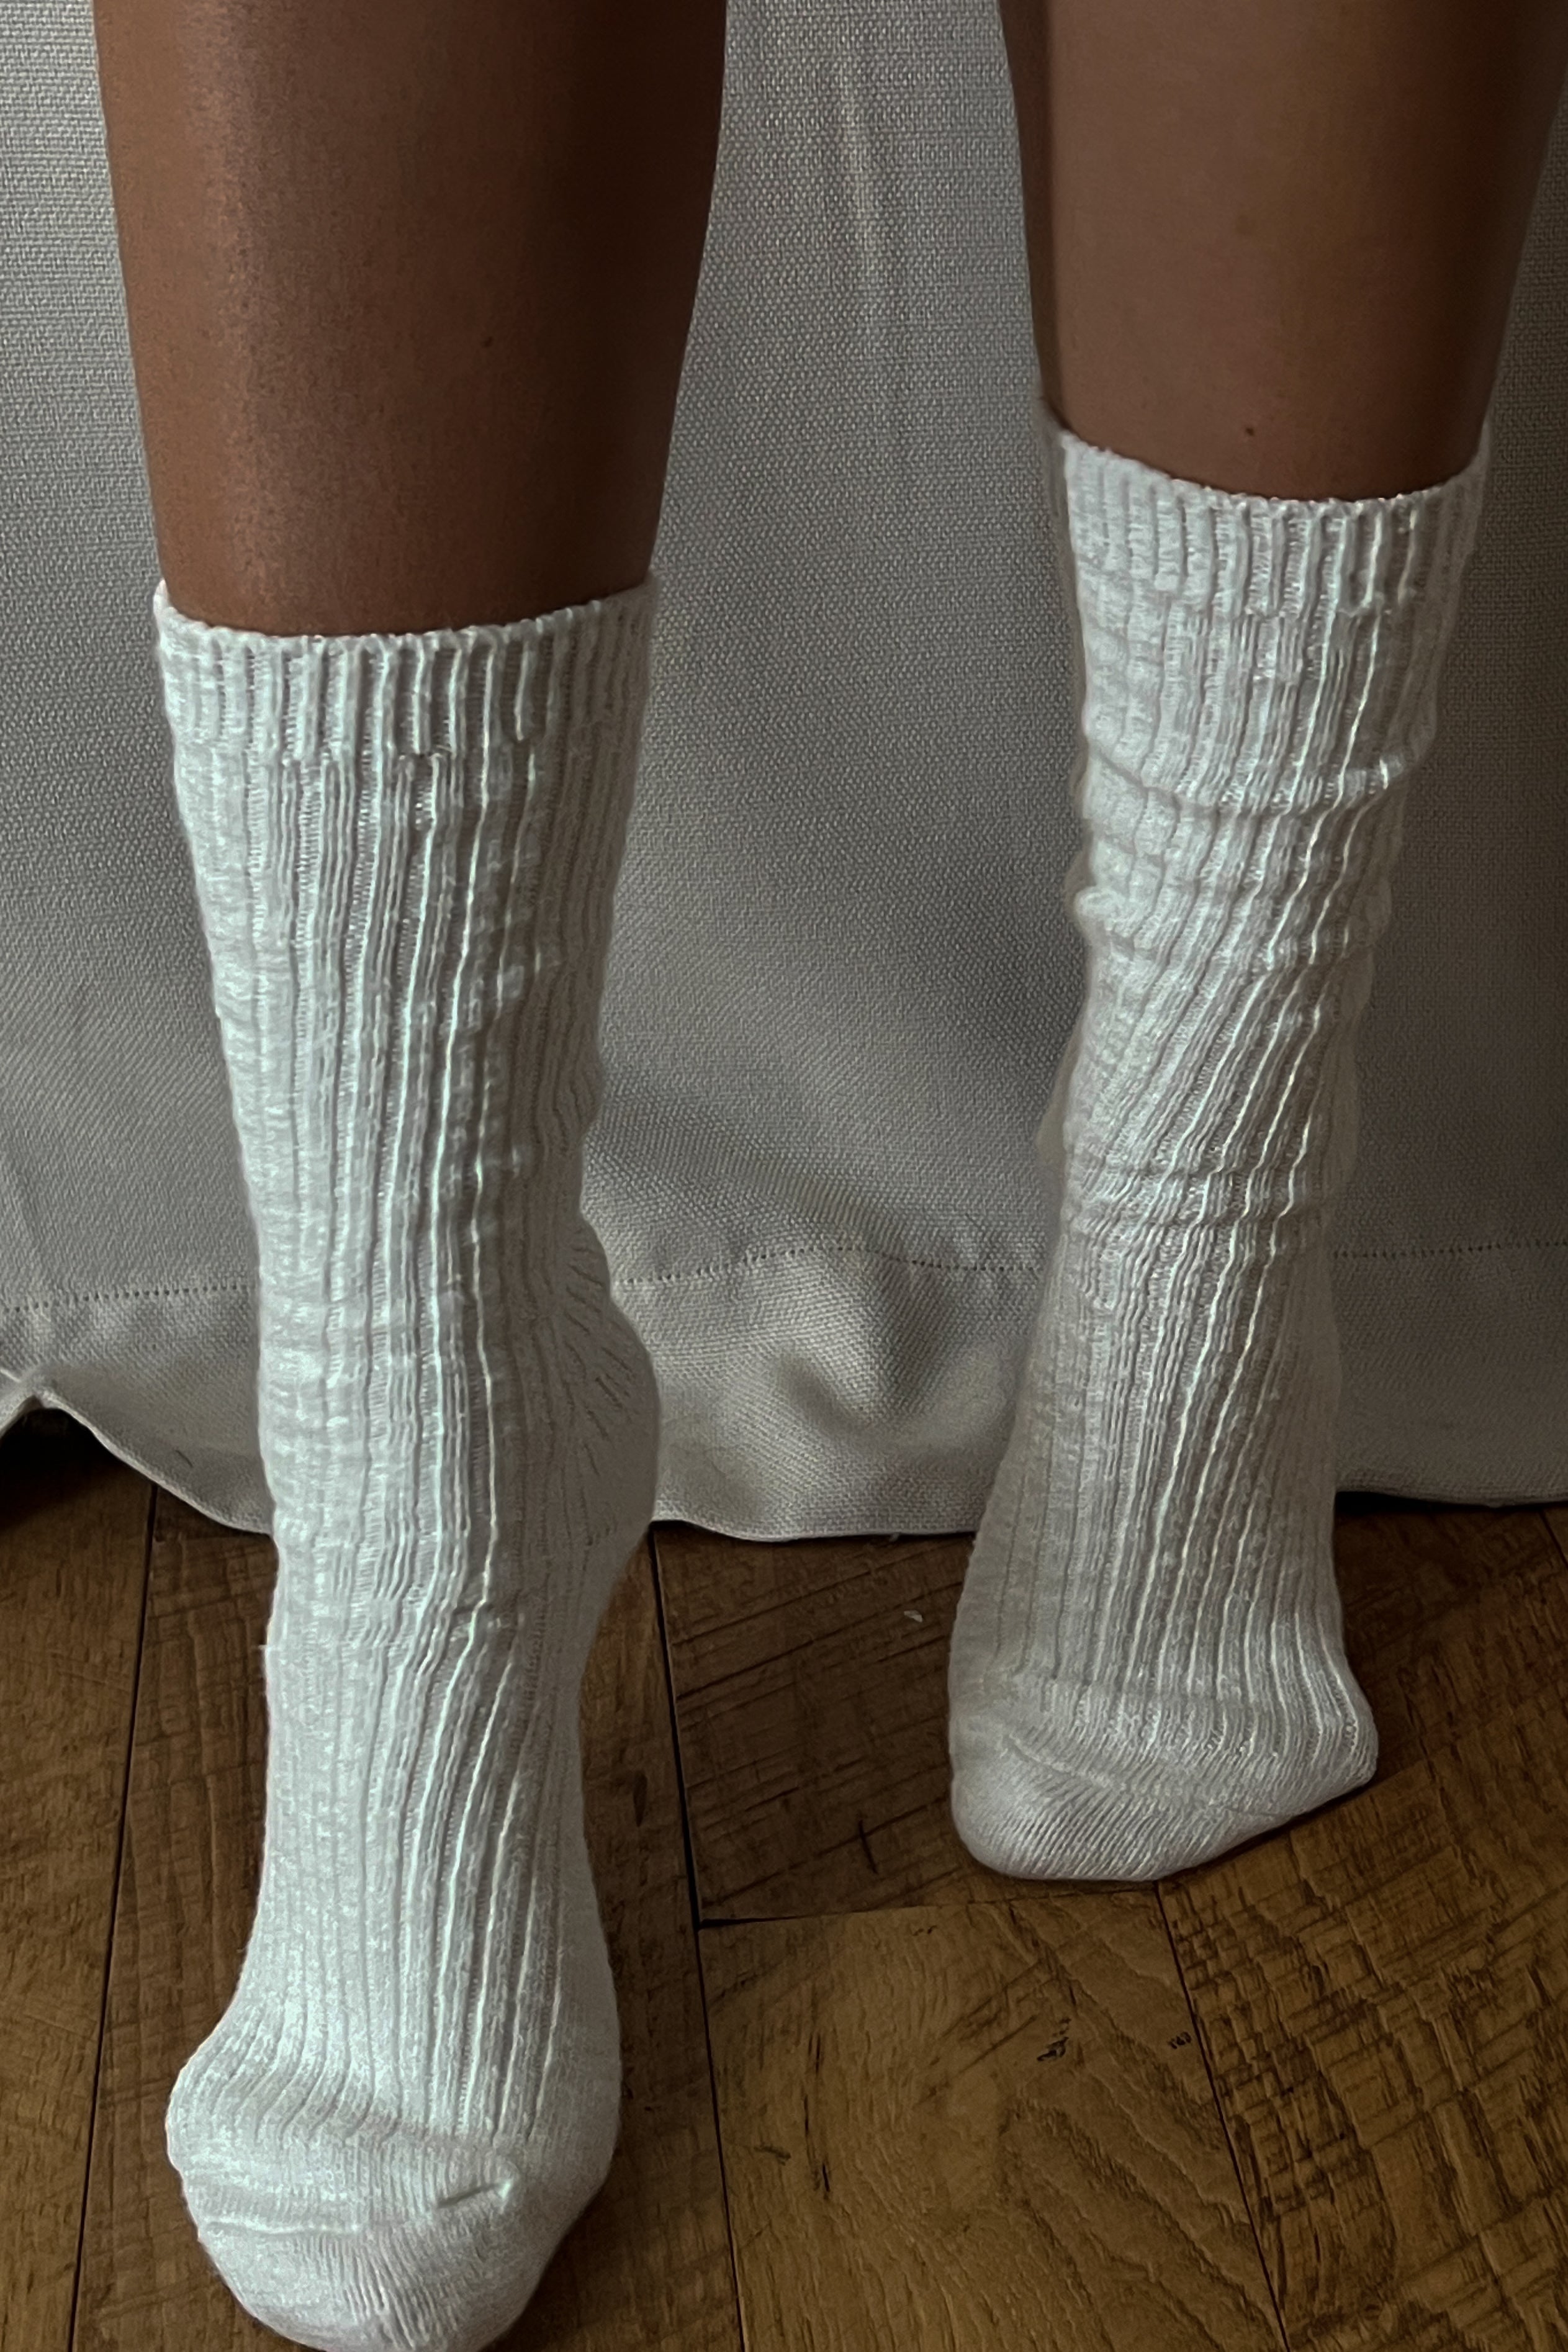 Le Bon - Cottage Socks